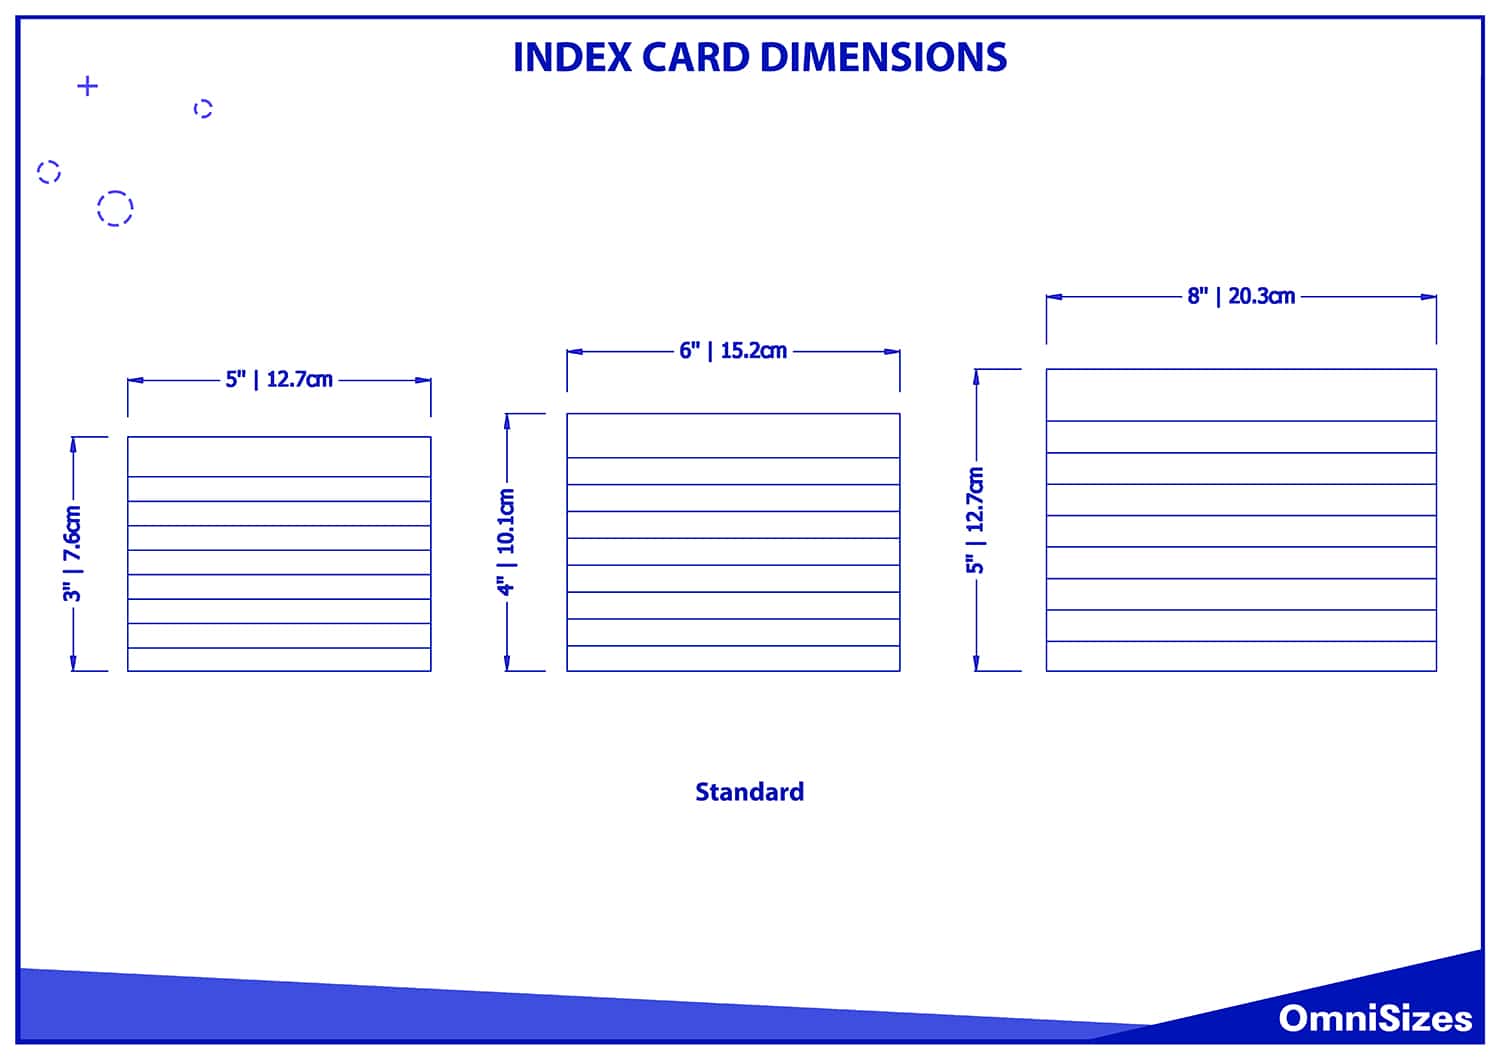 Index Card dimensions